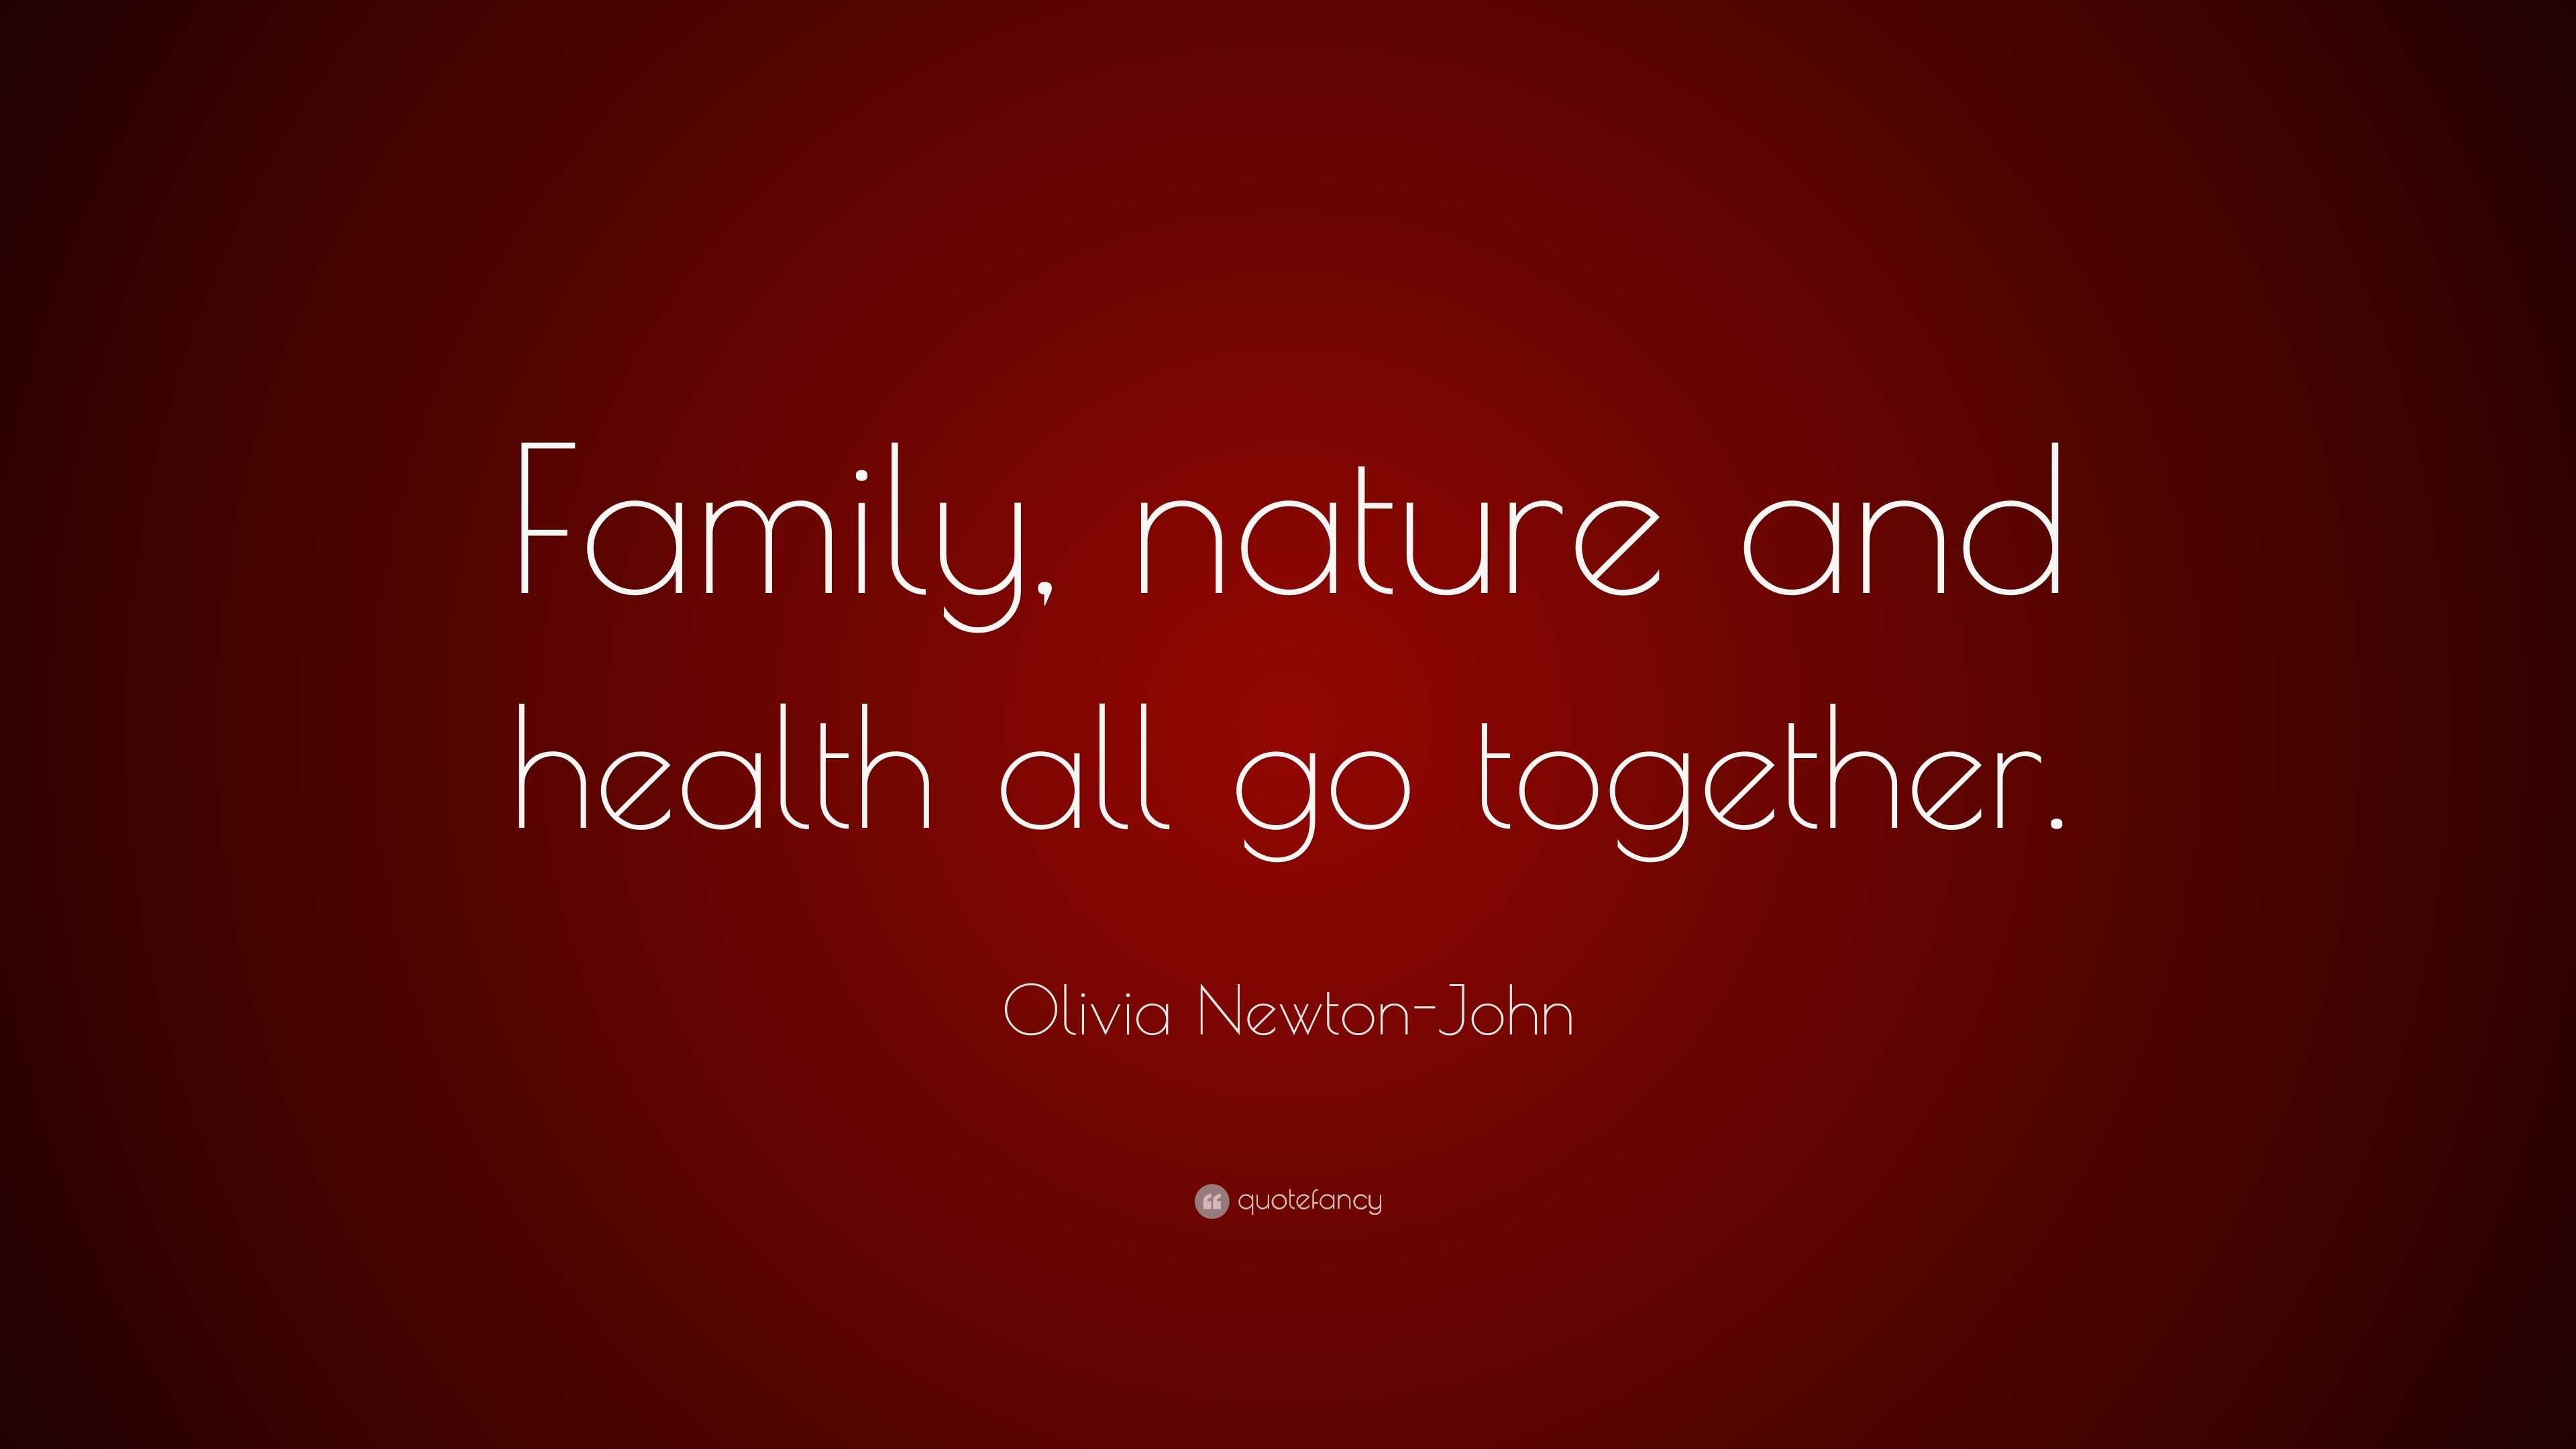 Olivia Newton-John Quote: “Family